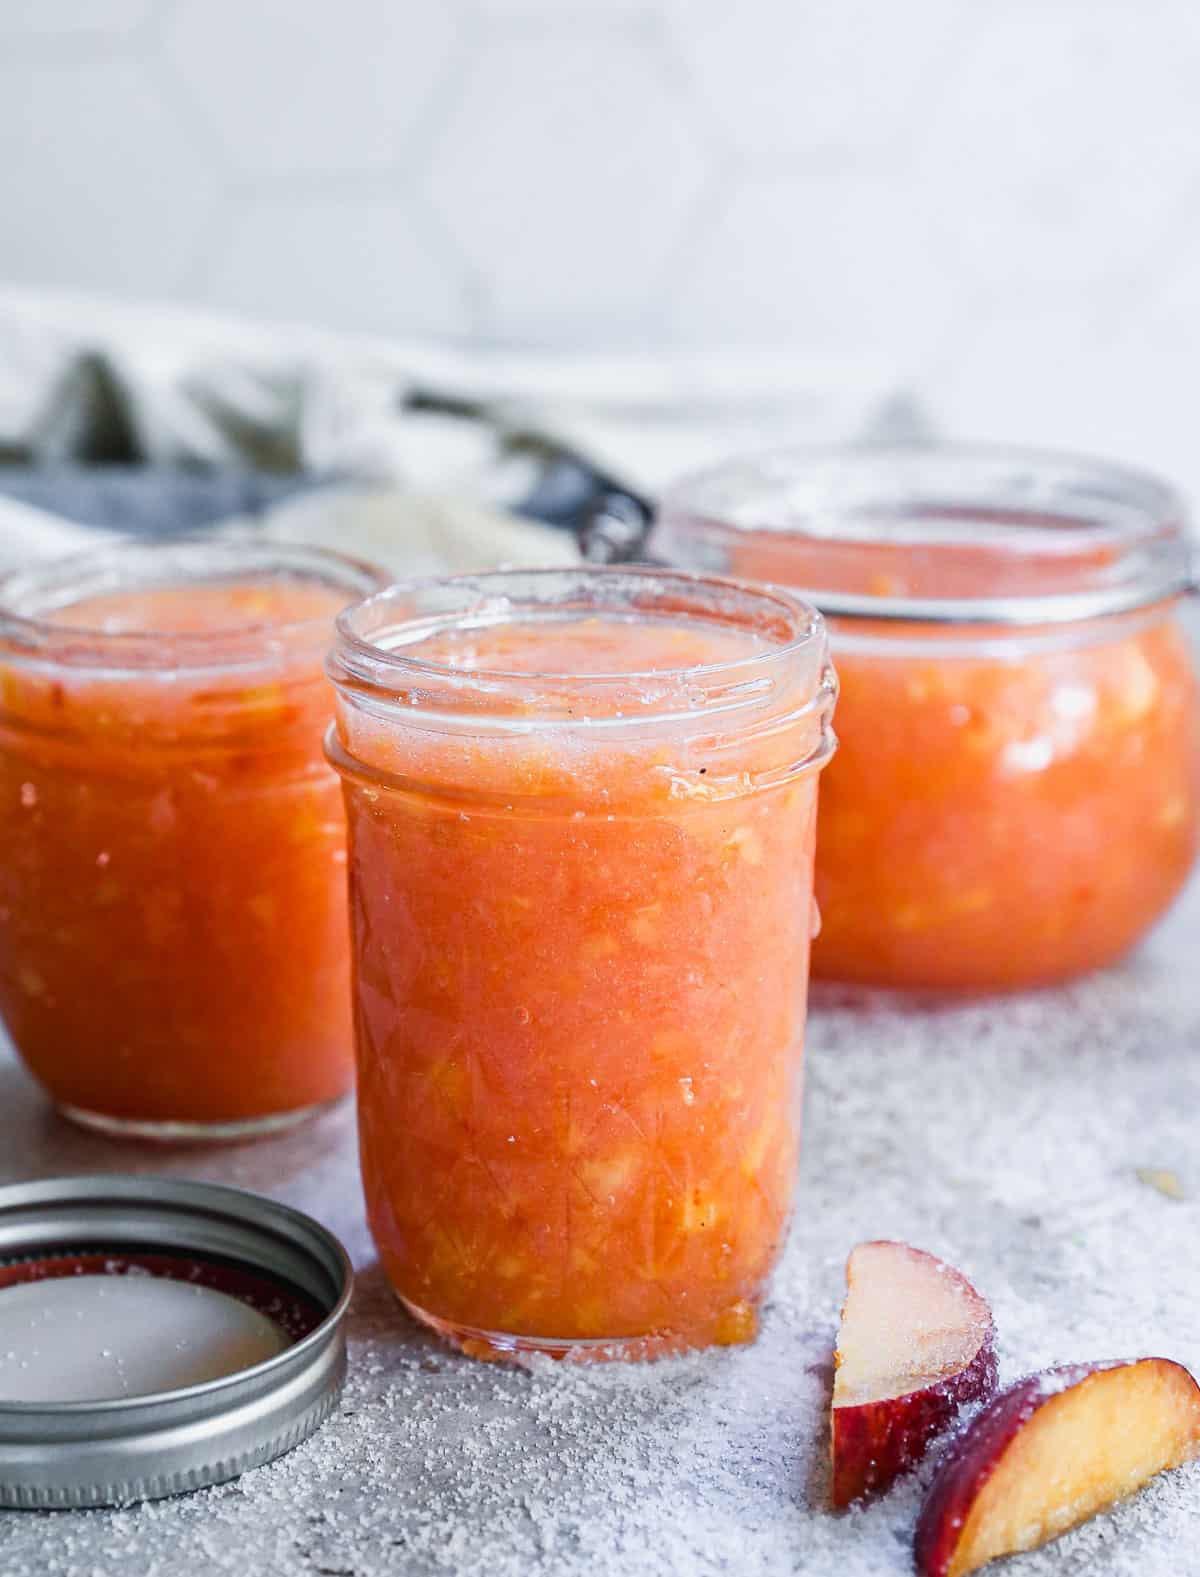 Homemade Peach Jam in glass jars, ready to enjoy!